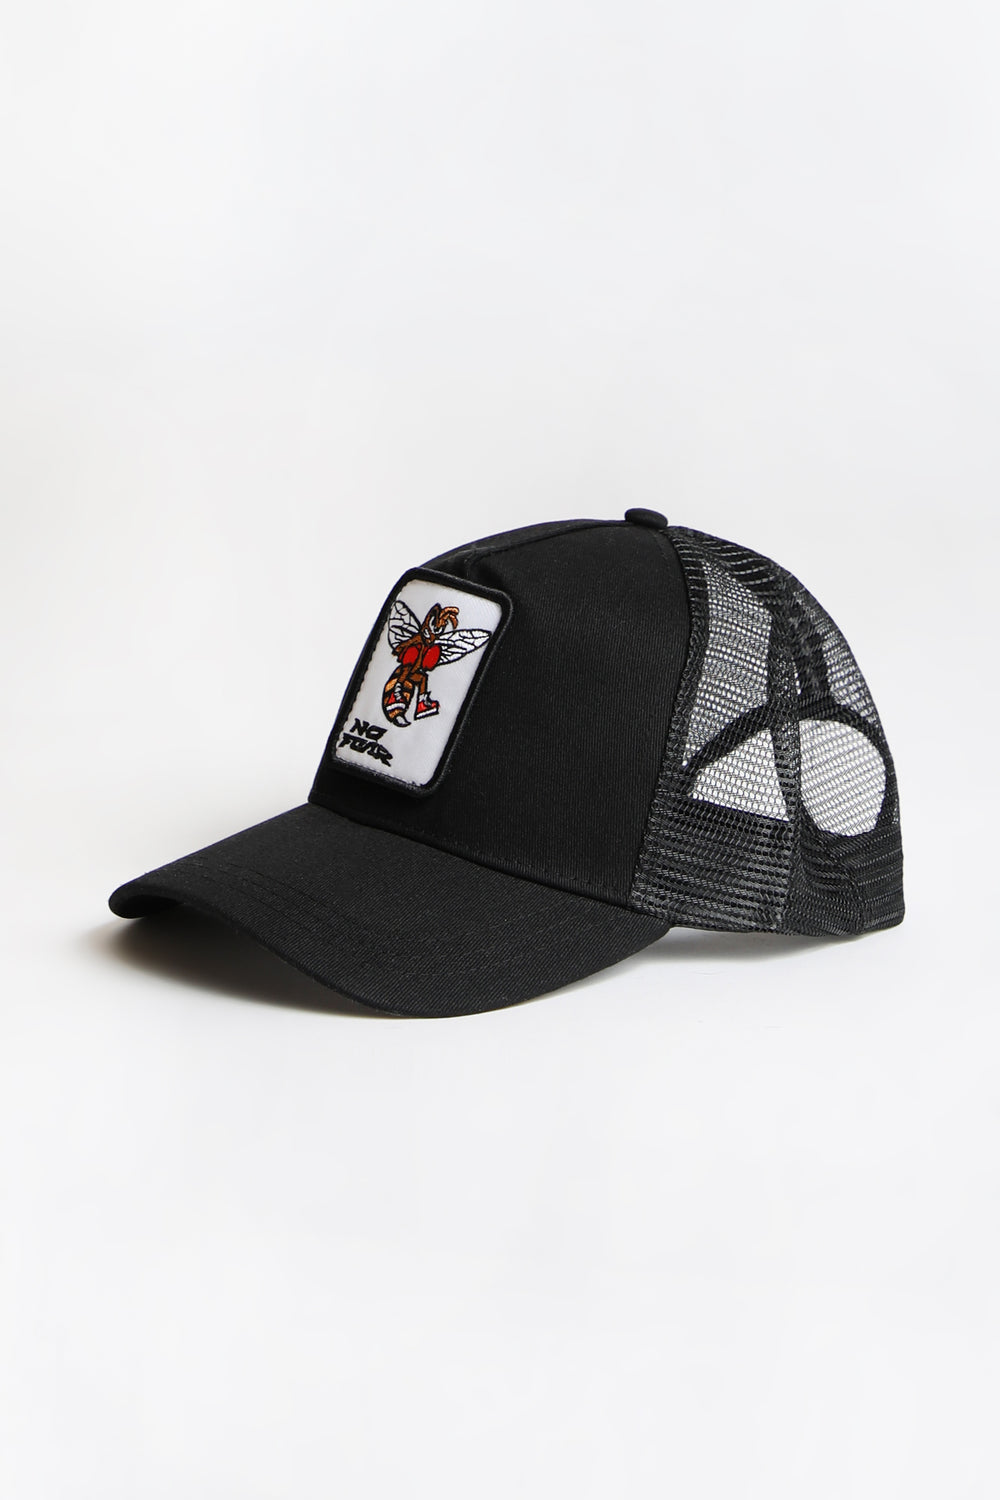 No Fear Mens Boxer Bee Trucker Hat Black